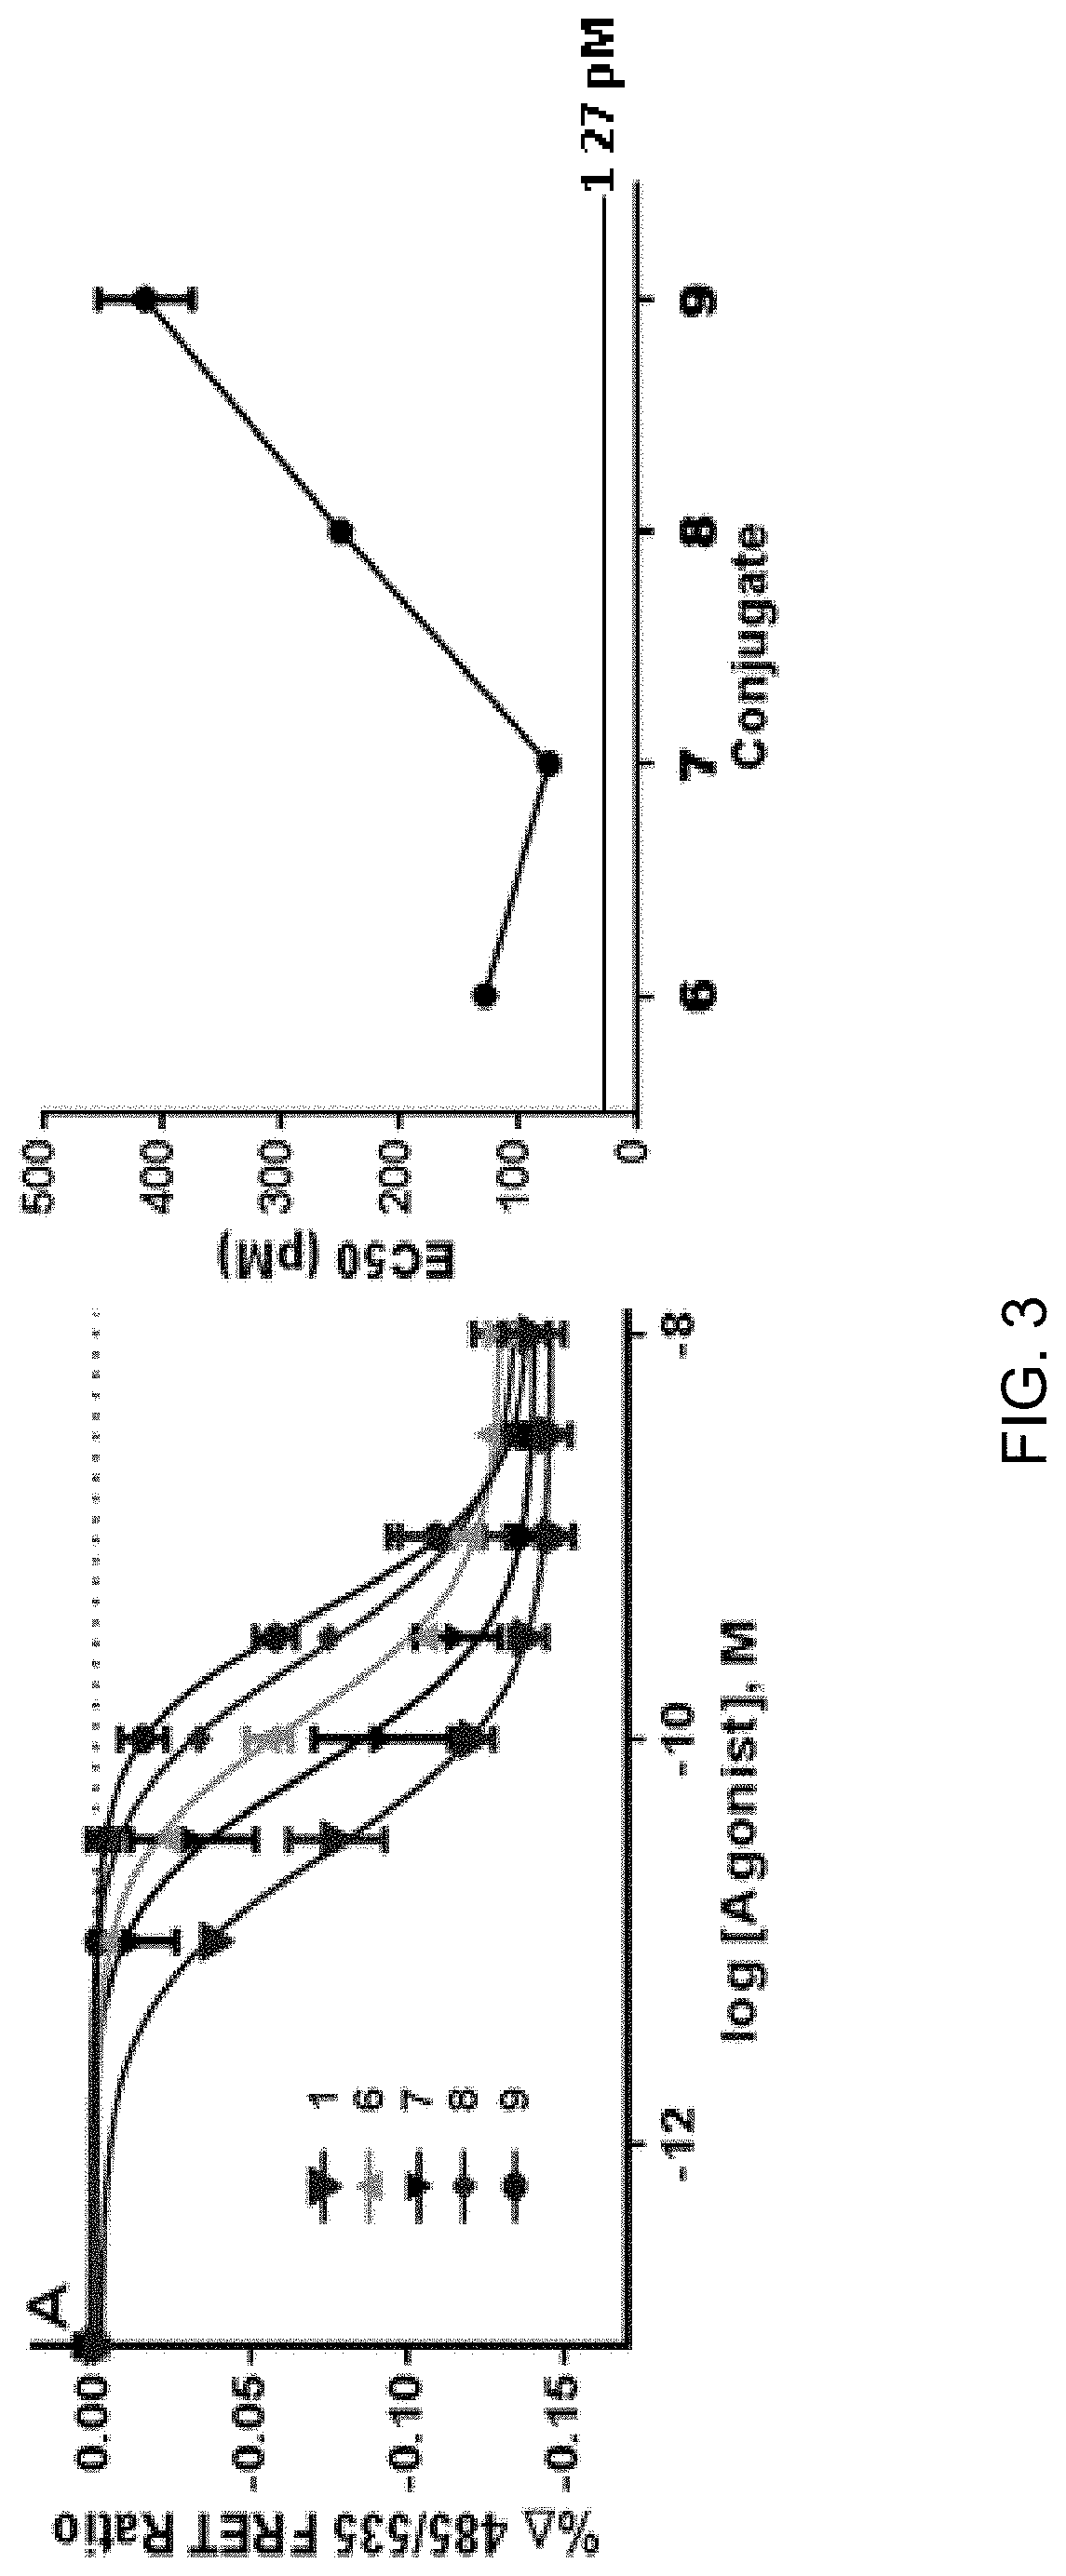 Glycemic Control Using Intrinsic Factor Bound to A Vitamin B12 Conjugate of a Glucagon-Like Peptide-1 Receptor Agonist